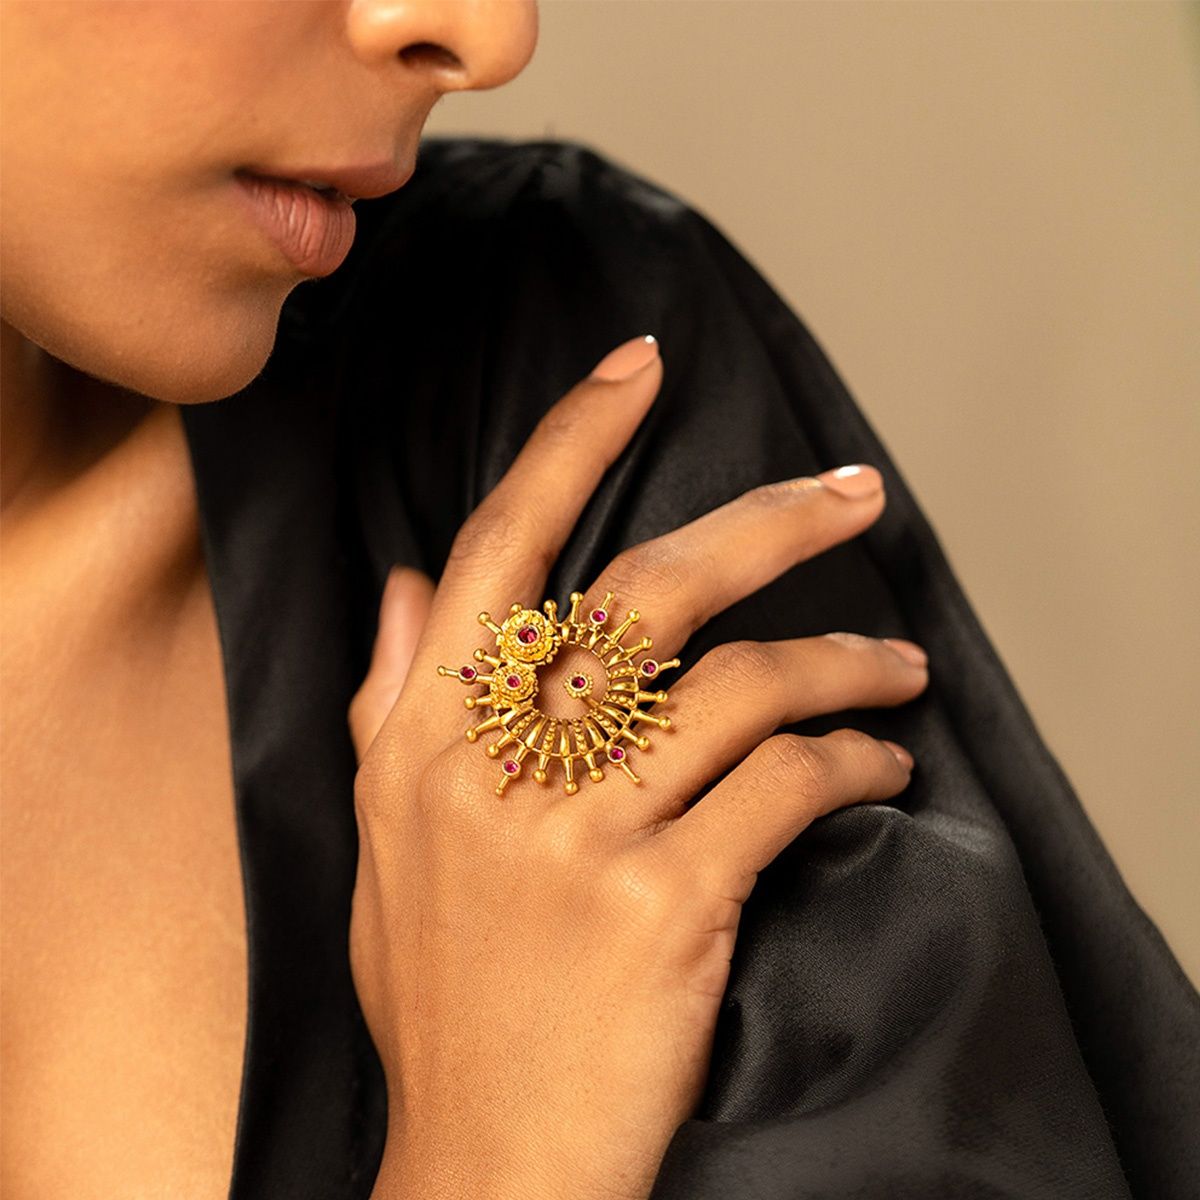 Shaya by CaratLane focuses on unisex silver jewellery